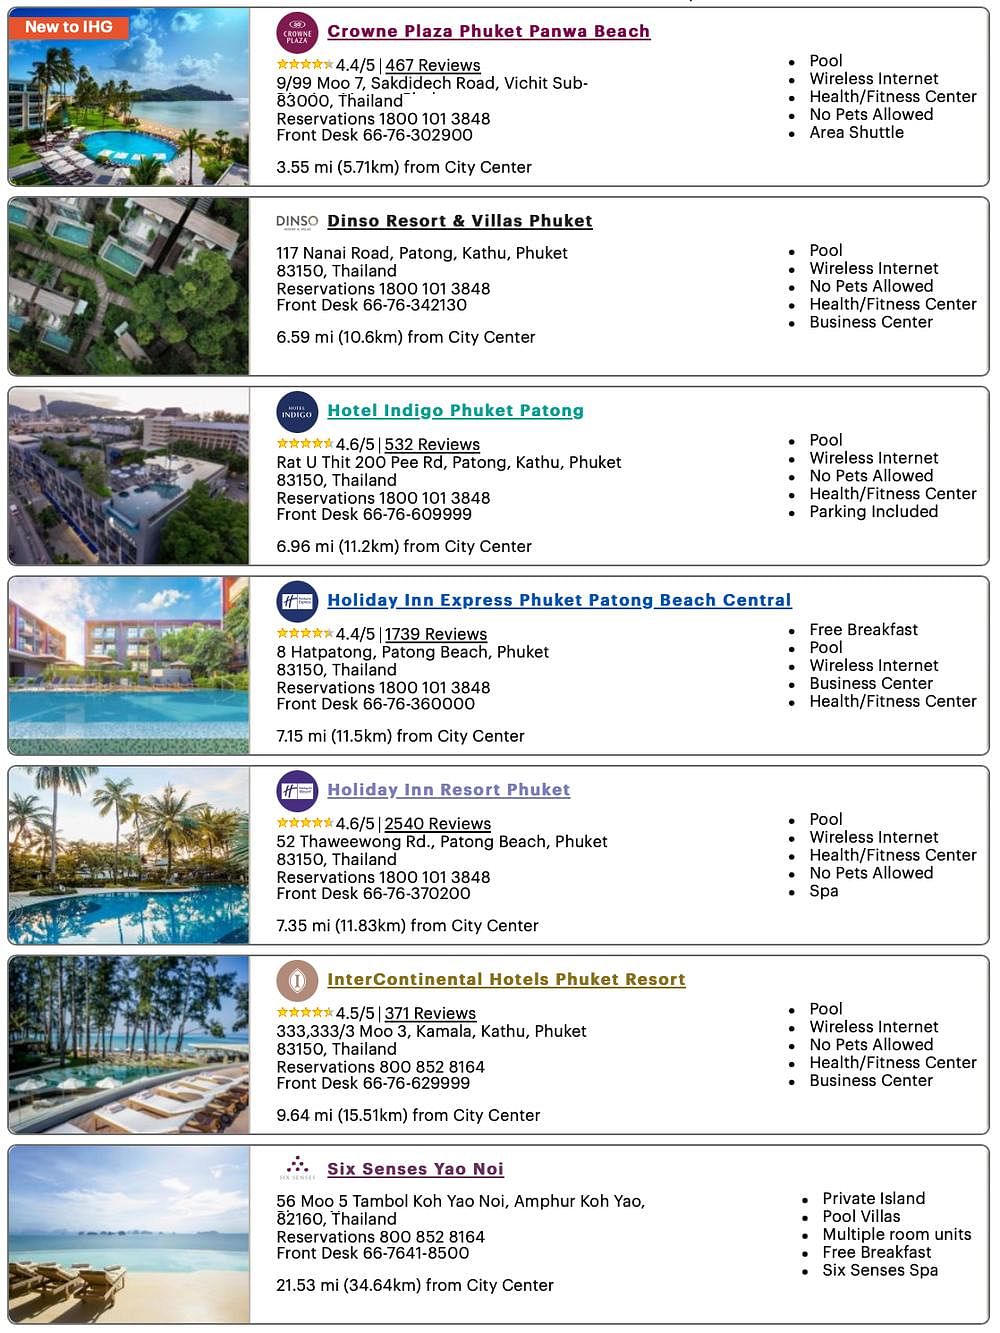 List of IHG hotels in Phuket